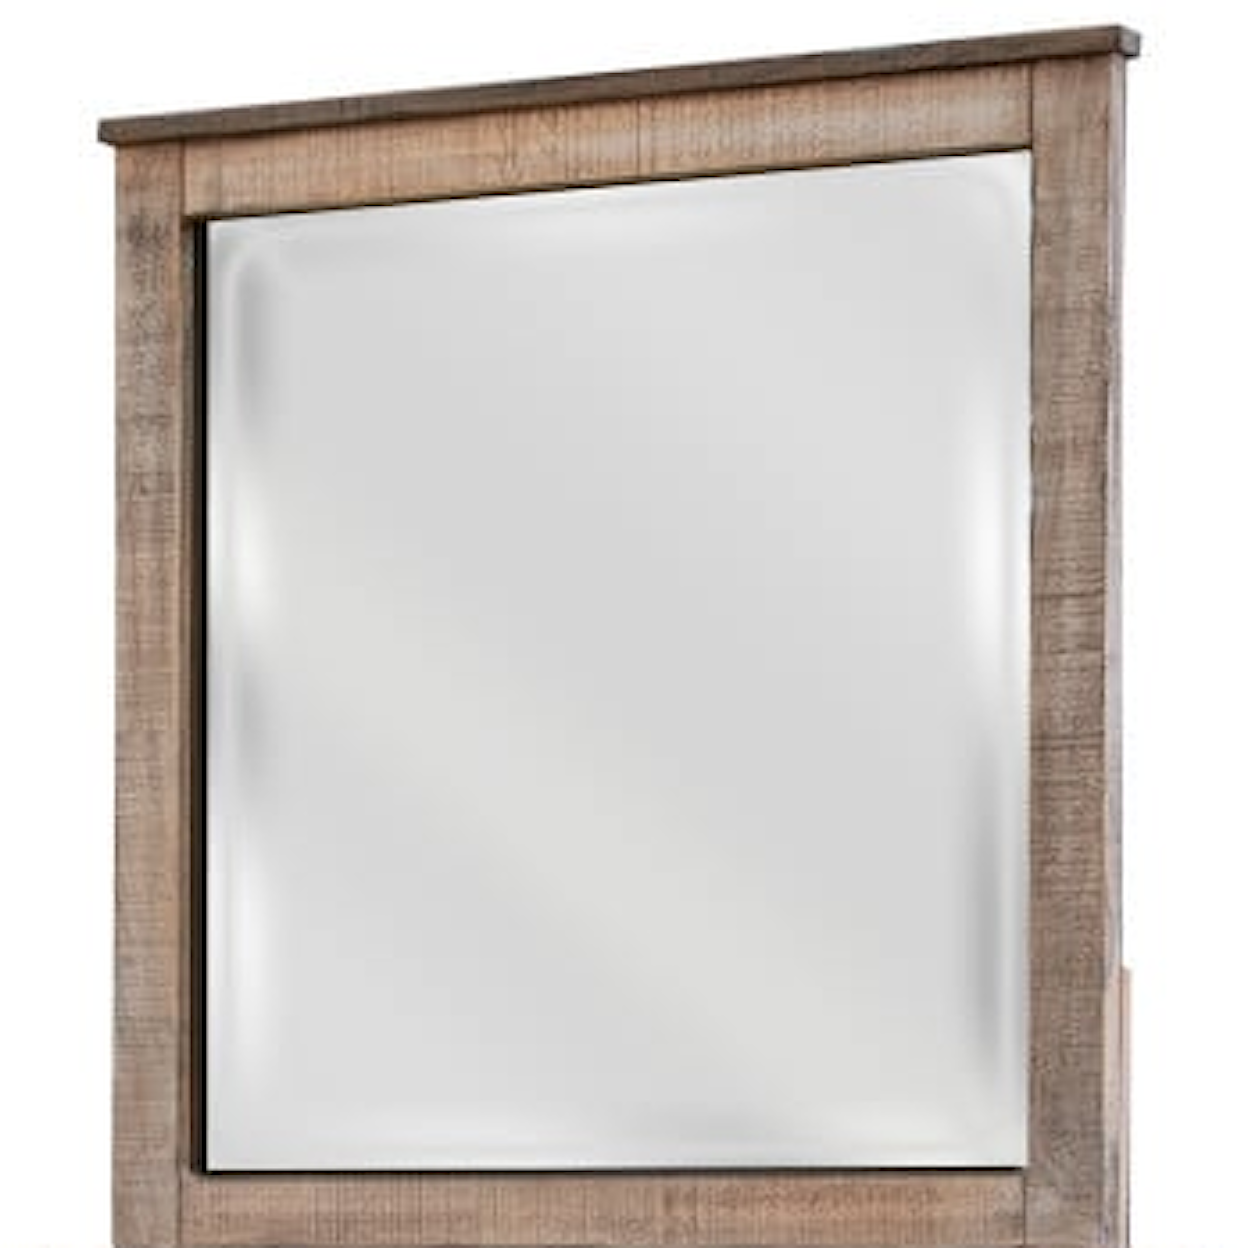 International Furniture Direct Comala Dresser Mirror with Natural Wooden Trim